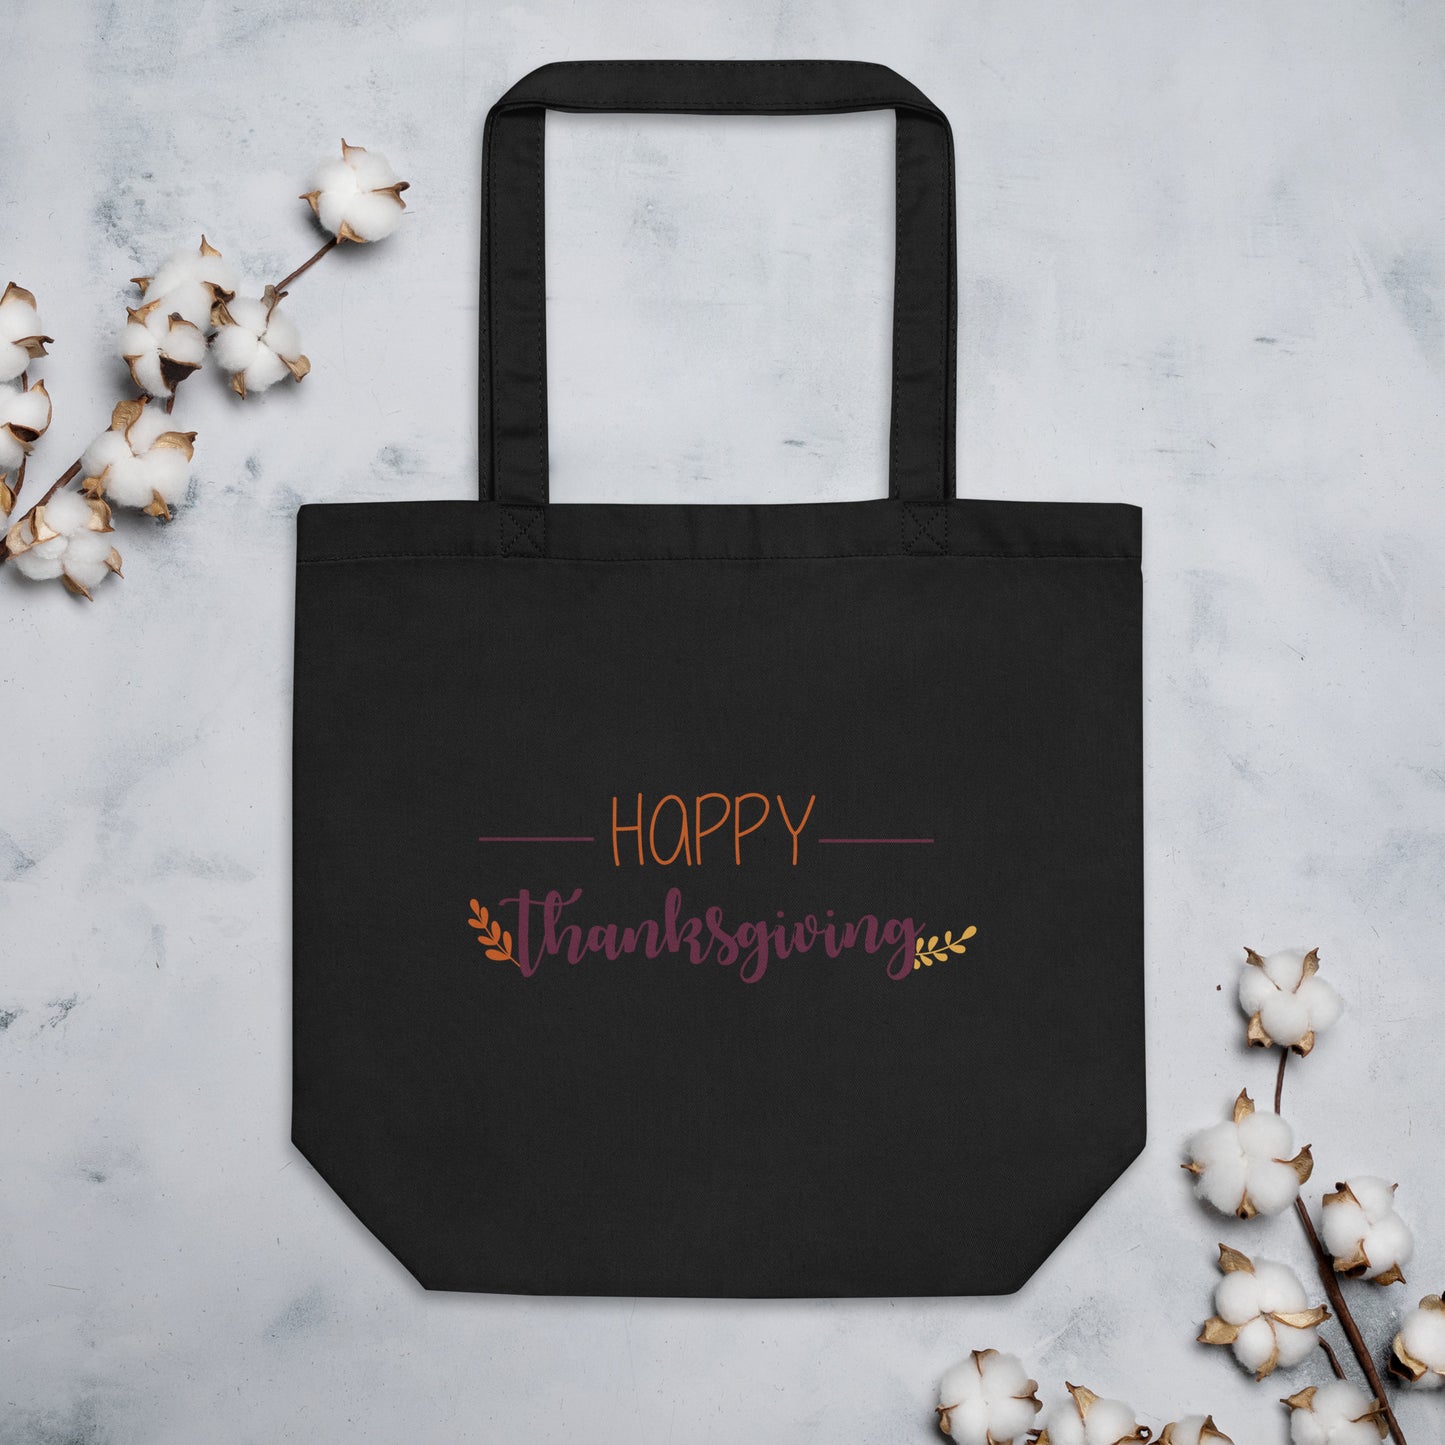 Happy Thanksgiving Eco Tote Bag